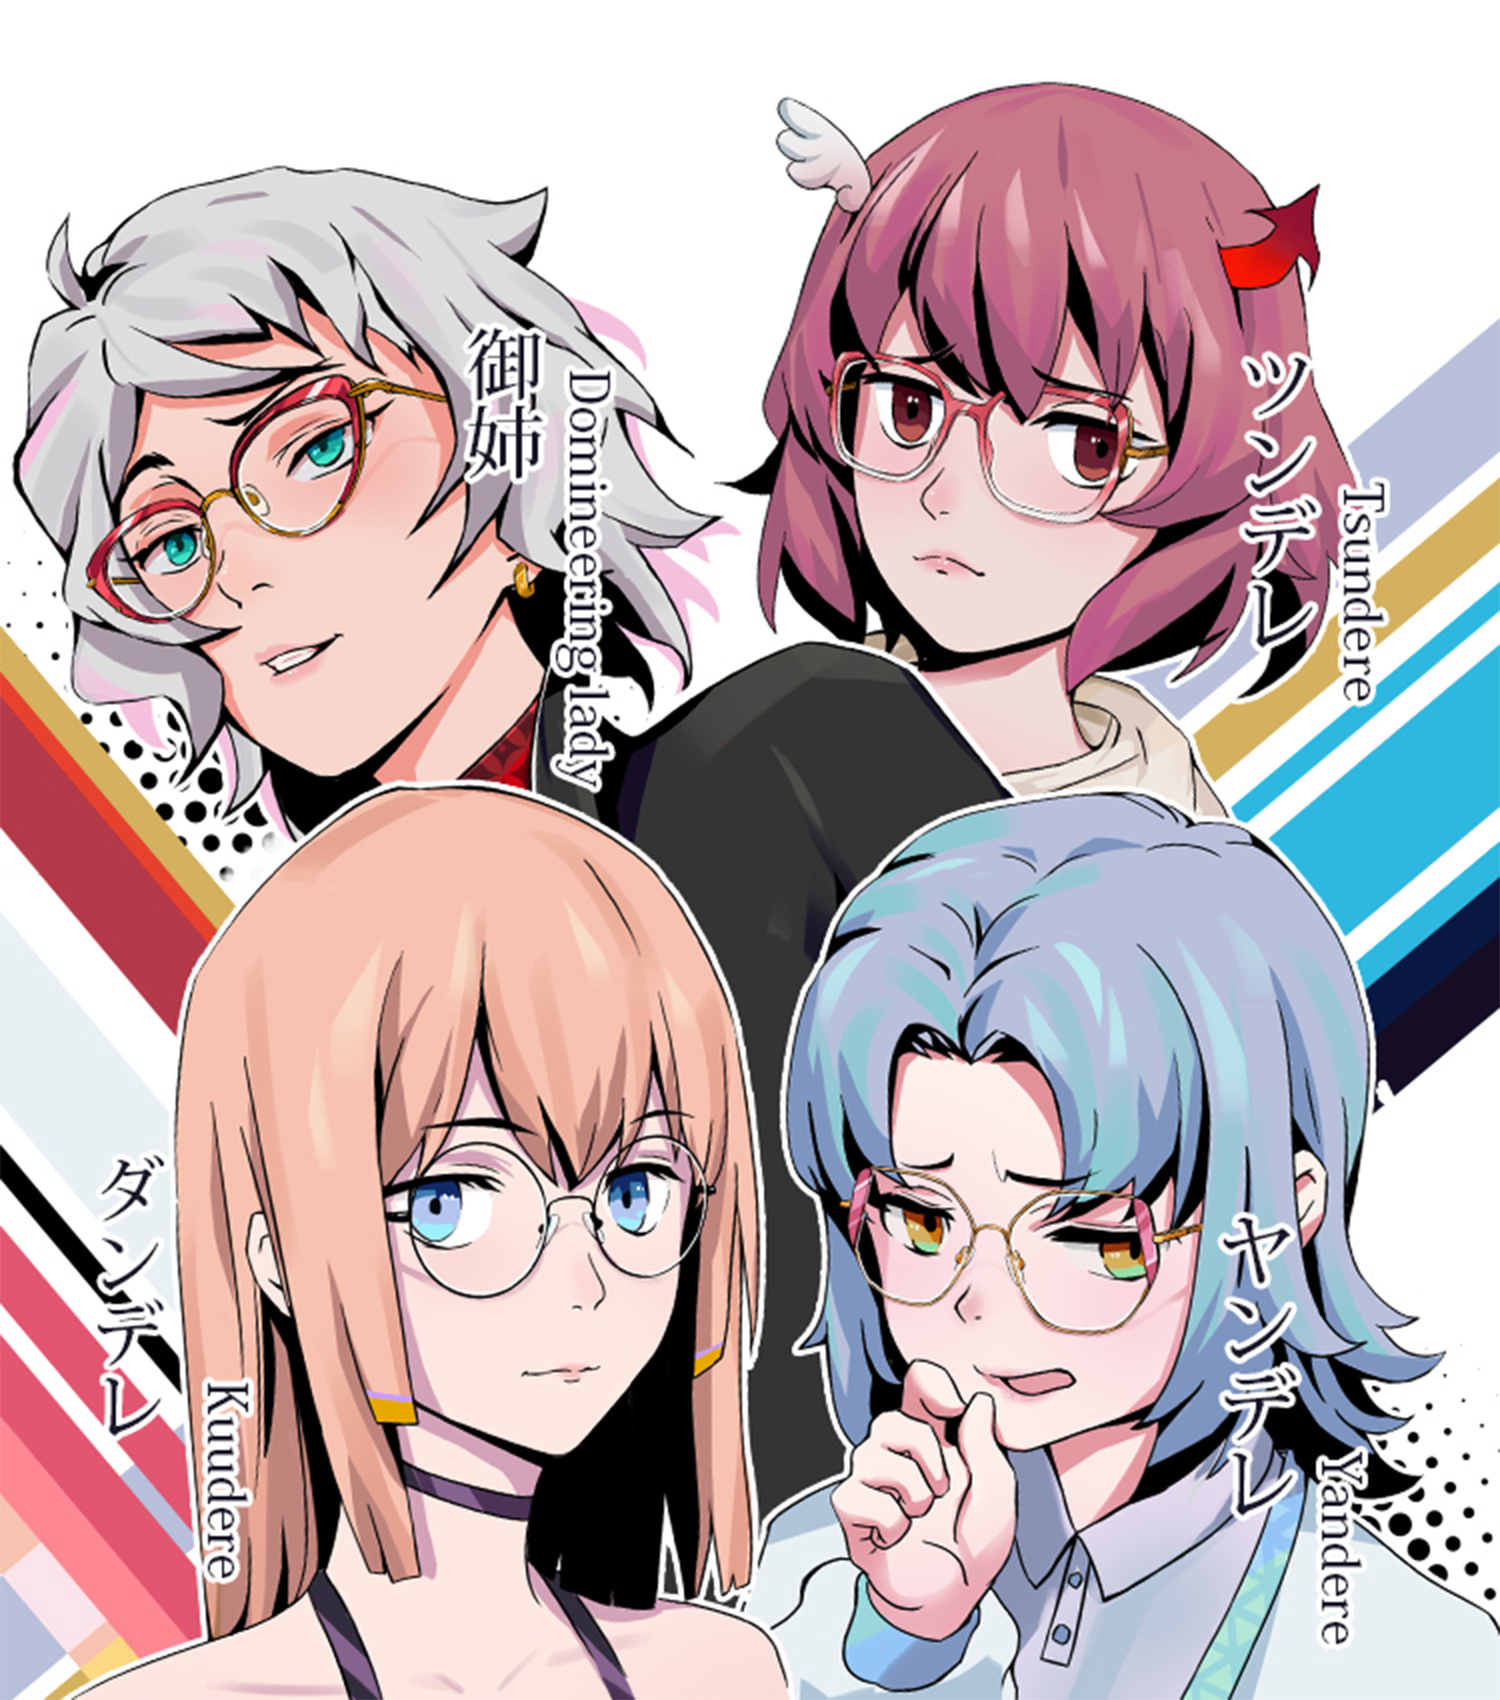 Eyeglasses is equal to Cool Anime Character  anifreakjoe